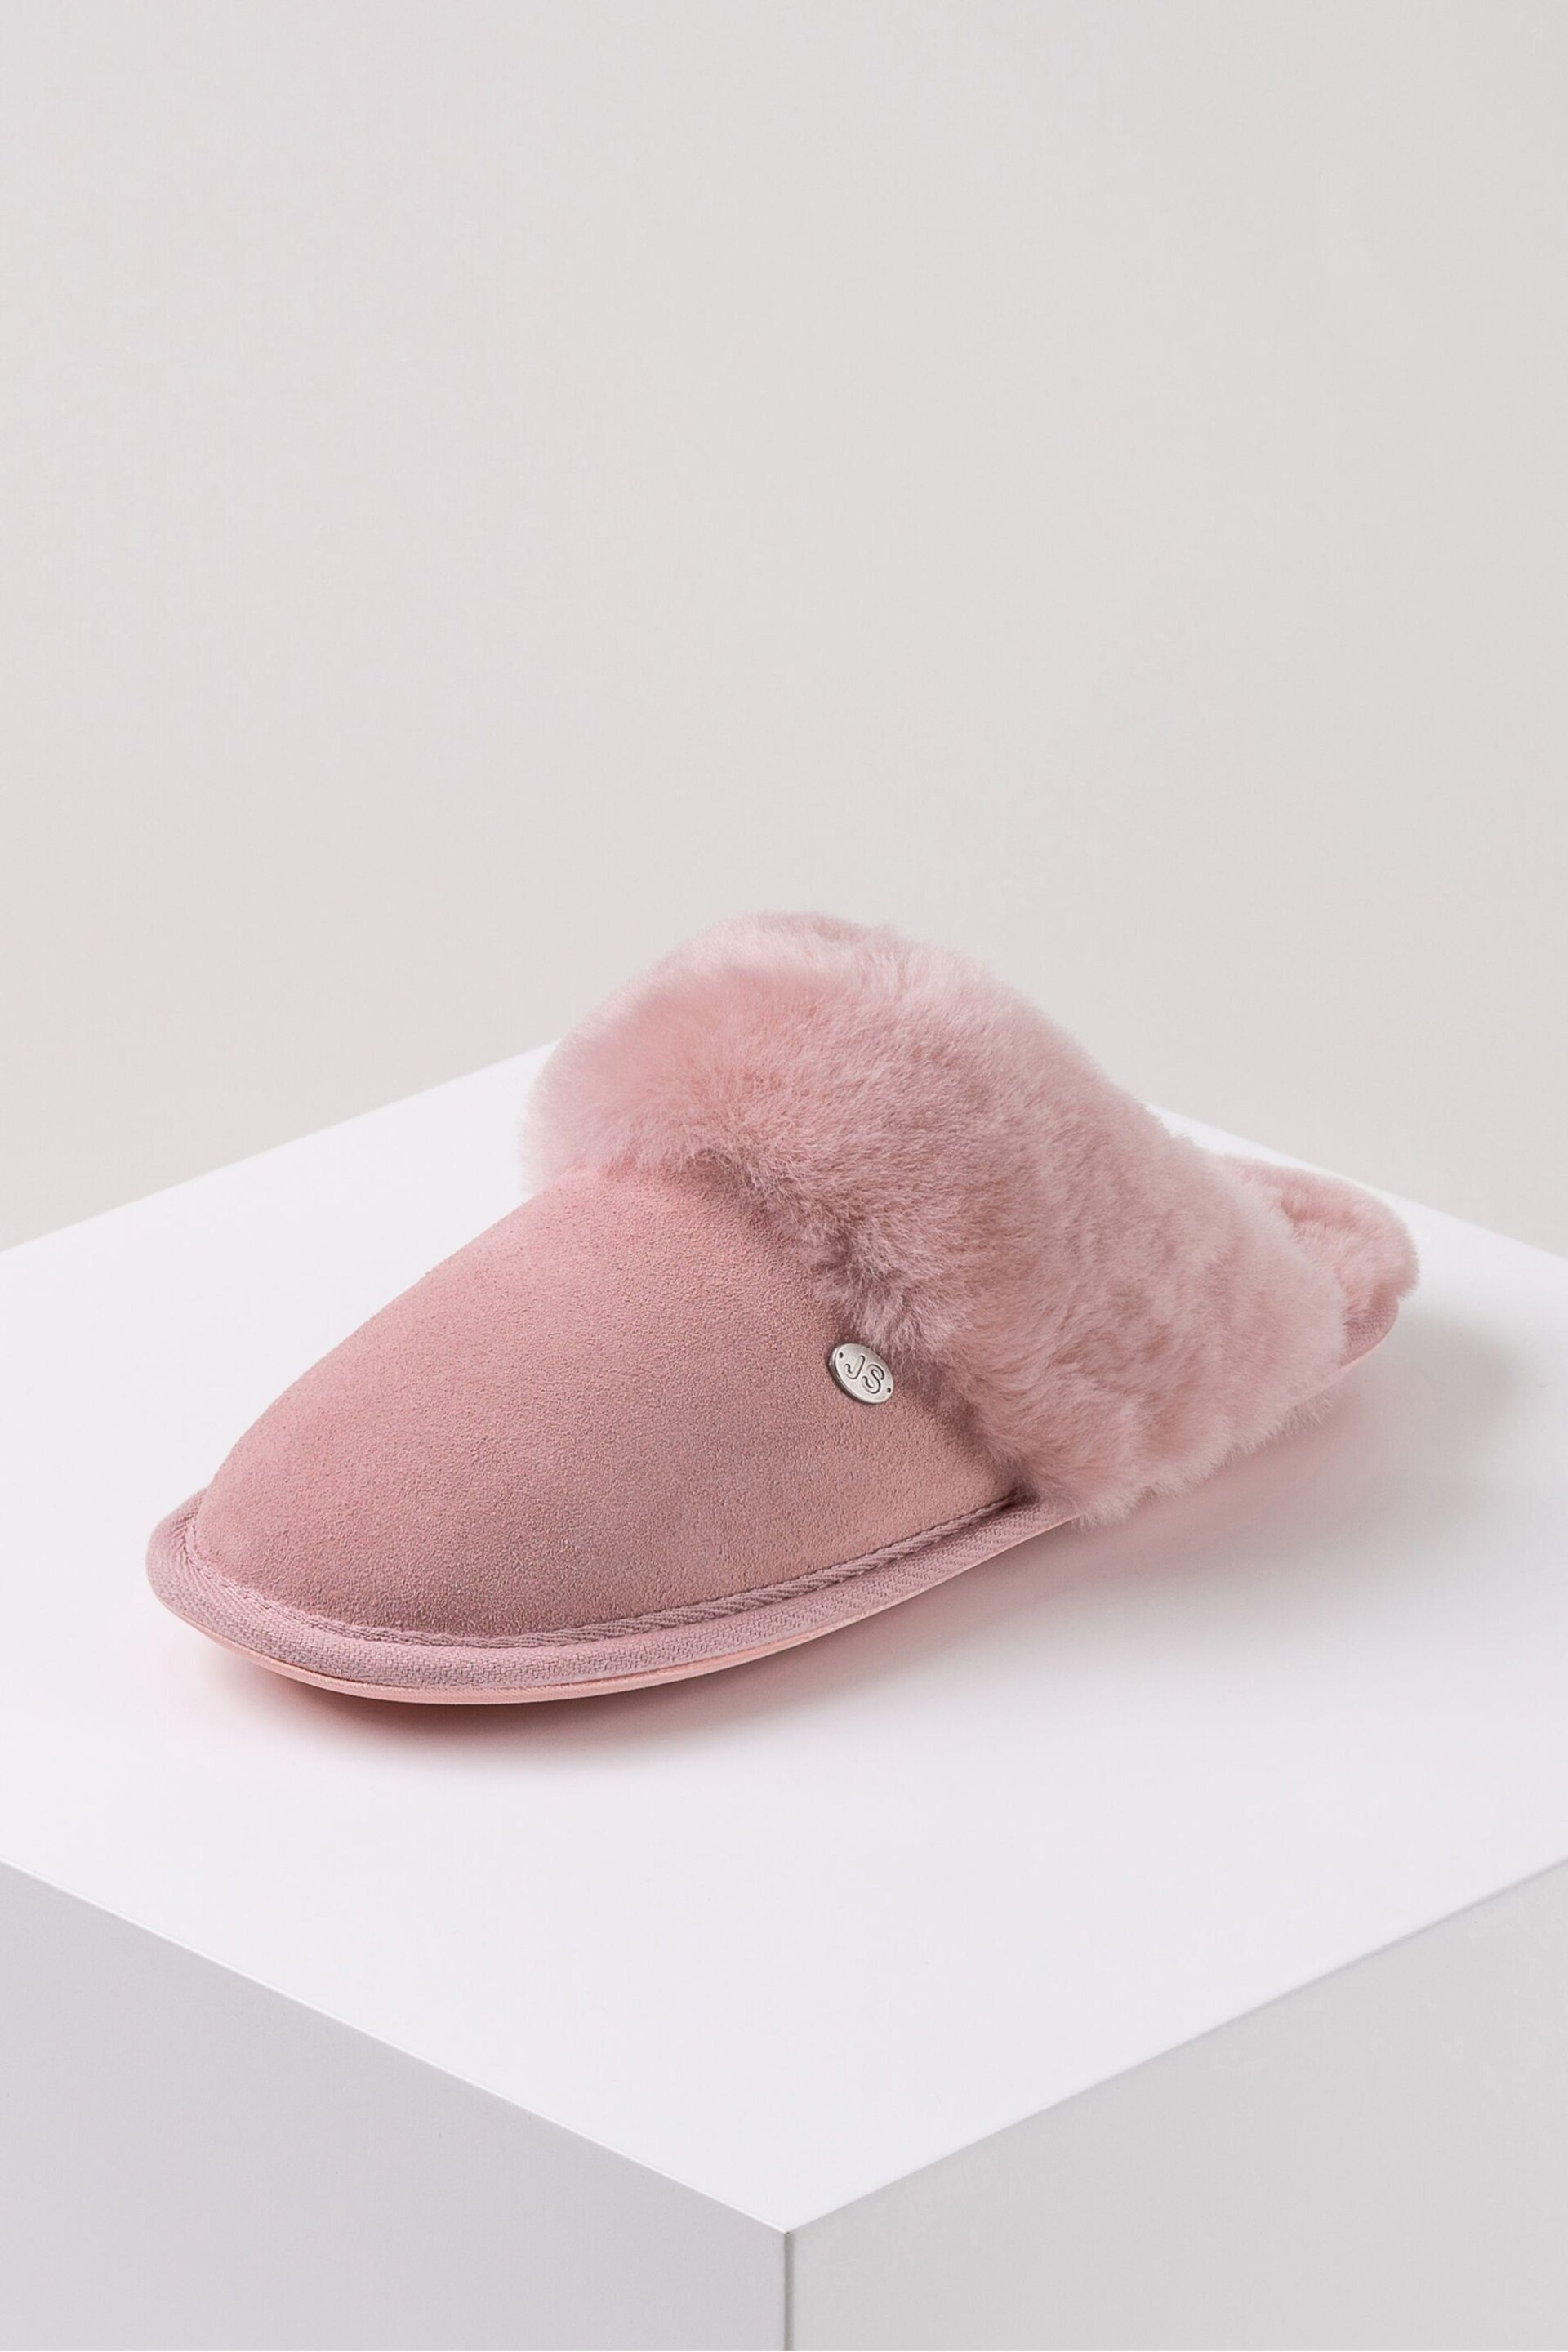 Just Sheepskin Baby Pink Ladies Duchess Sheepskin Slippers - Image 2 of 5